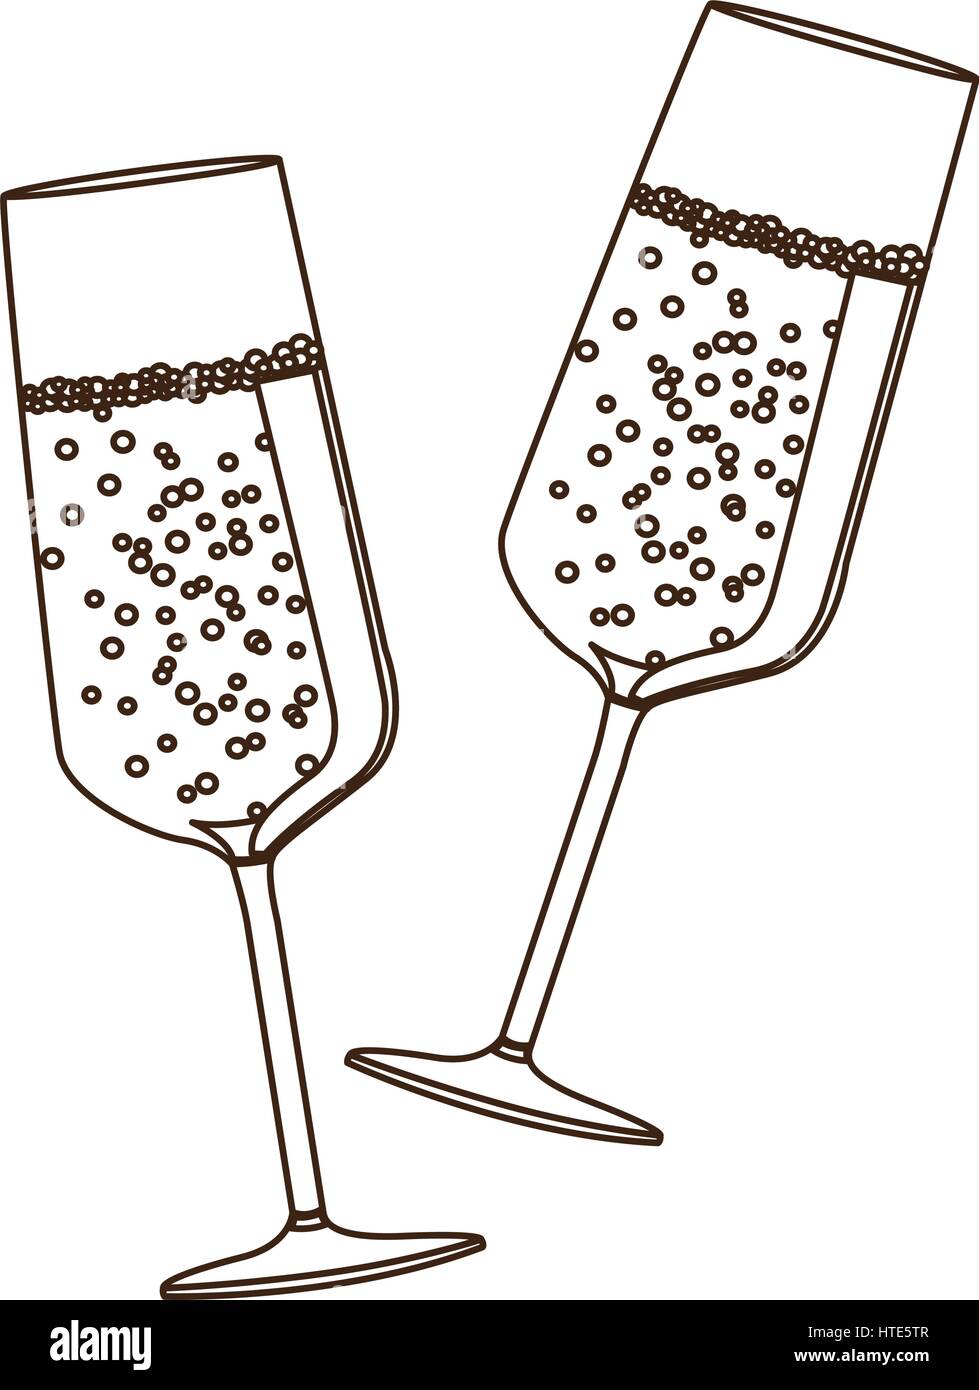 Dibujo silueta par brindis champagne copas Imagen Vector de stock - Alamy